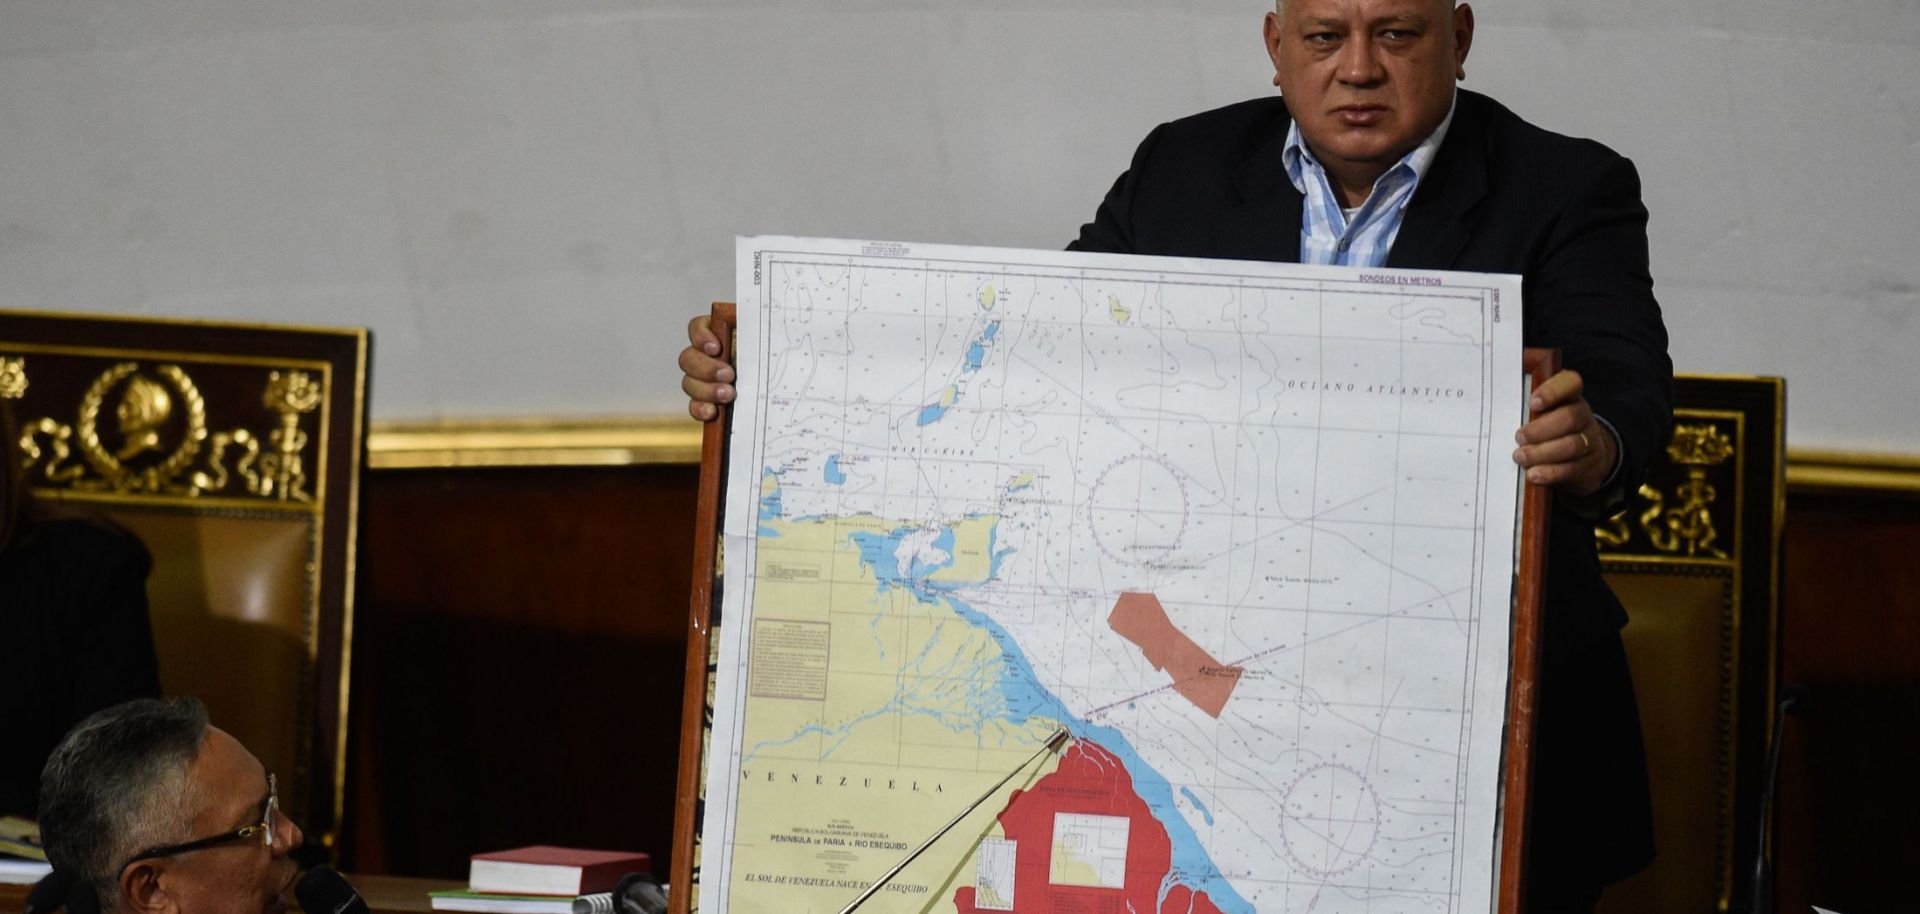 Venezuelan lawmaker Pedro Carreno (L) delivers a speech while Venezuelan deputy Diosdado Cabello (R) holds a map showing the border between Venezuela and Guyana during a legislative session in Caracas on Jan. 8, 2019.